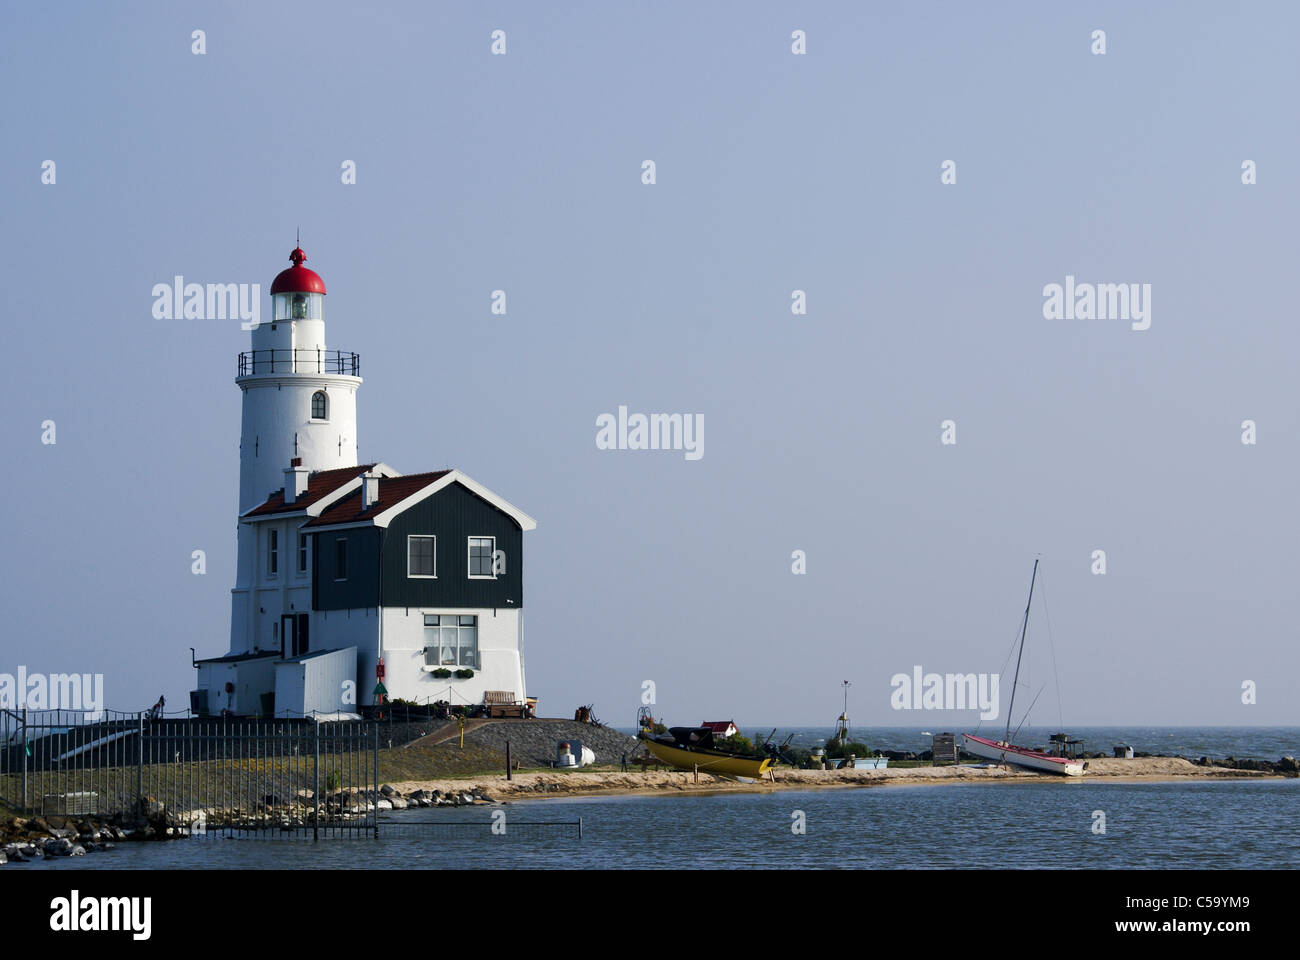 The Paard van Marken ('Horse of Marken') is a lighthouse on the Dutch peninsula Marken, on the IJsselmeer. It was built in 1839. Stock Photo